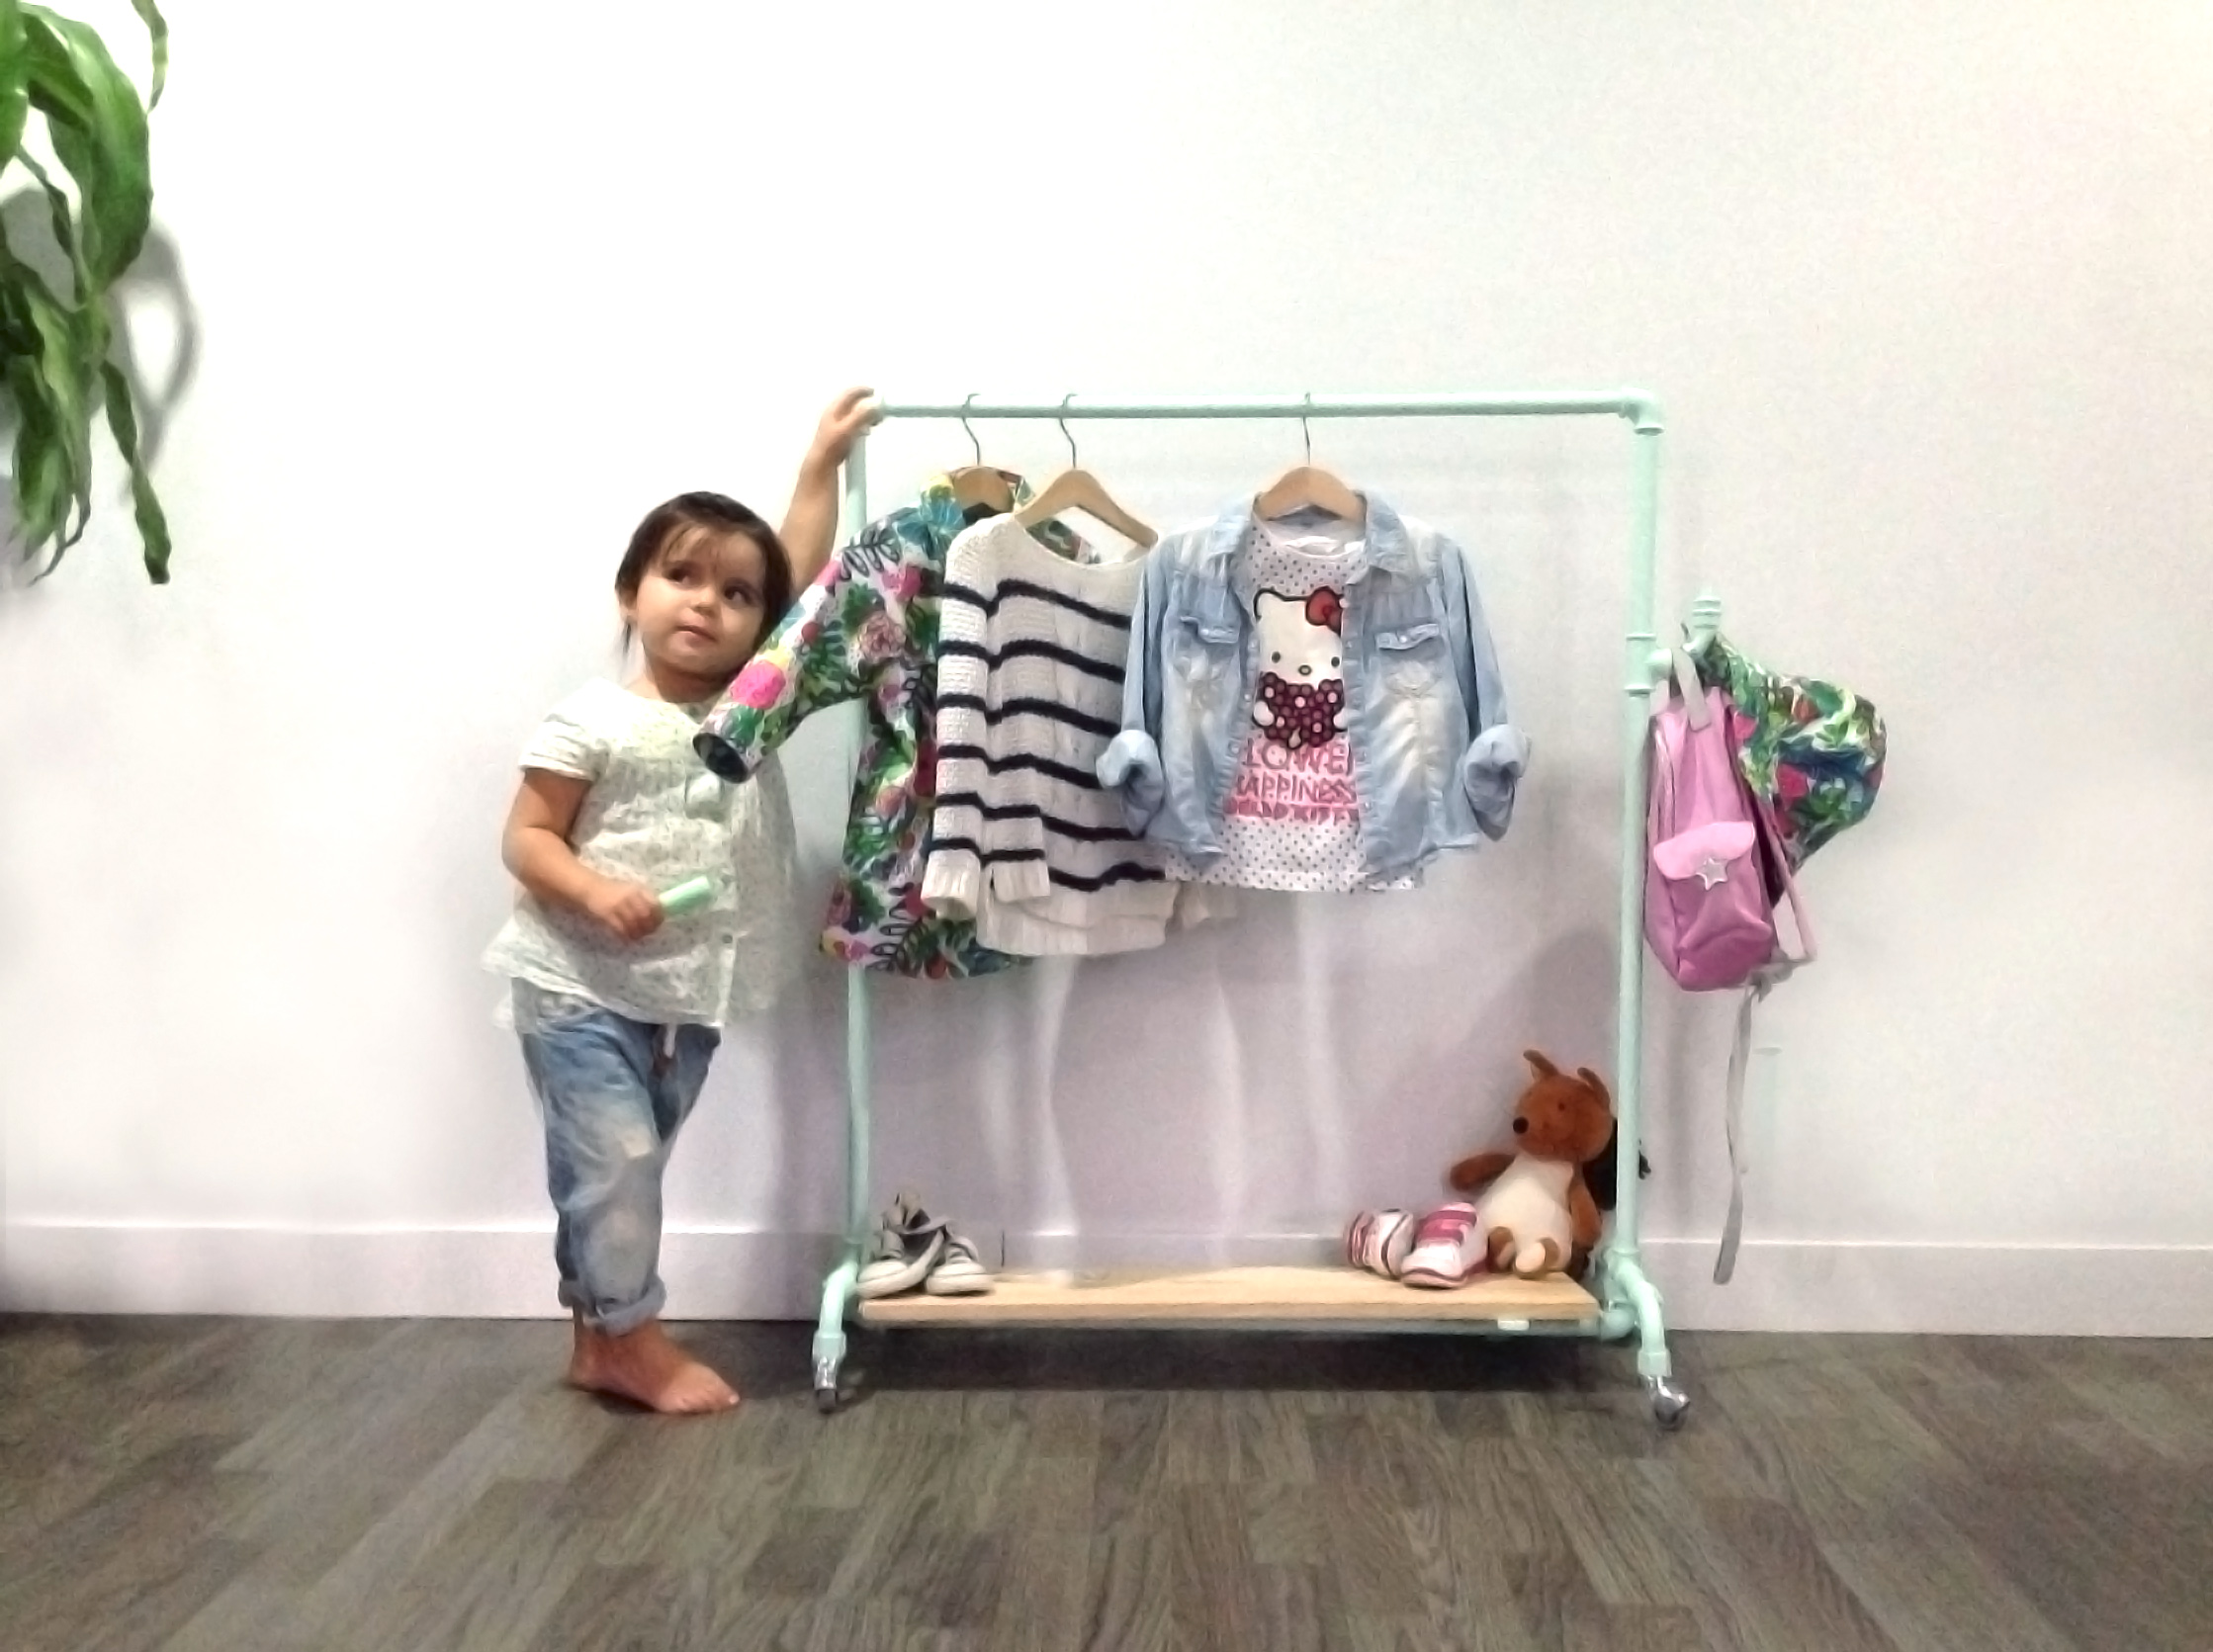 Burro para ropa diseñado a medida - Batlló oncept - Mobiliario infantil